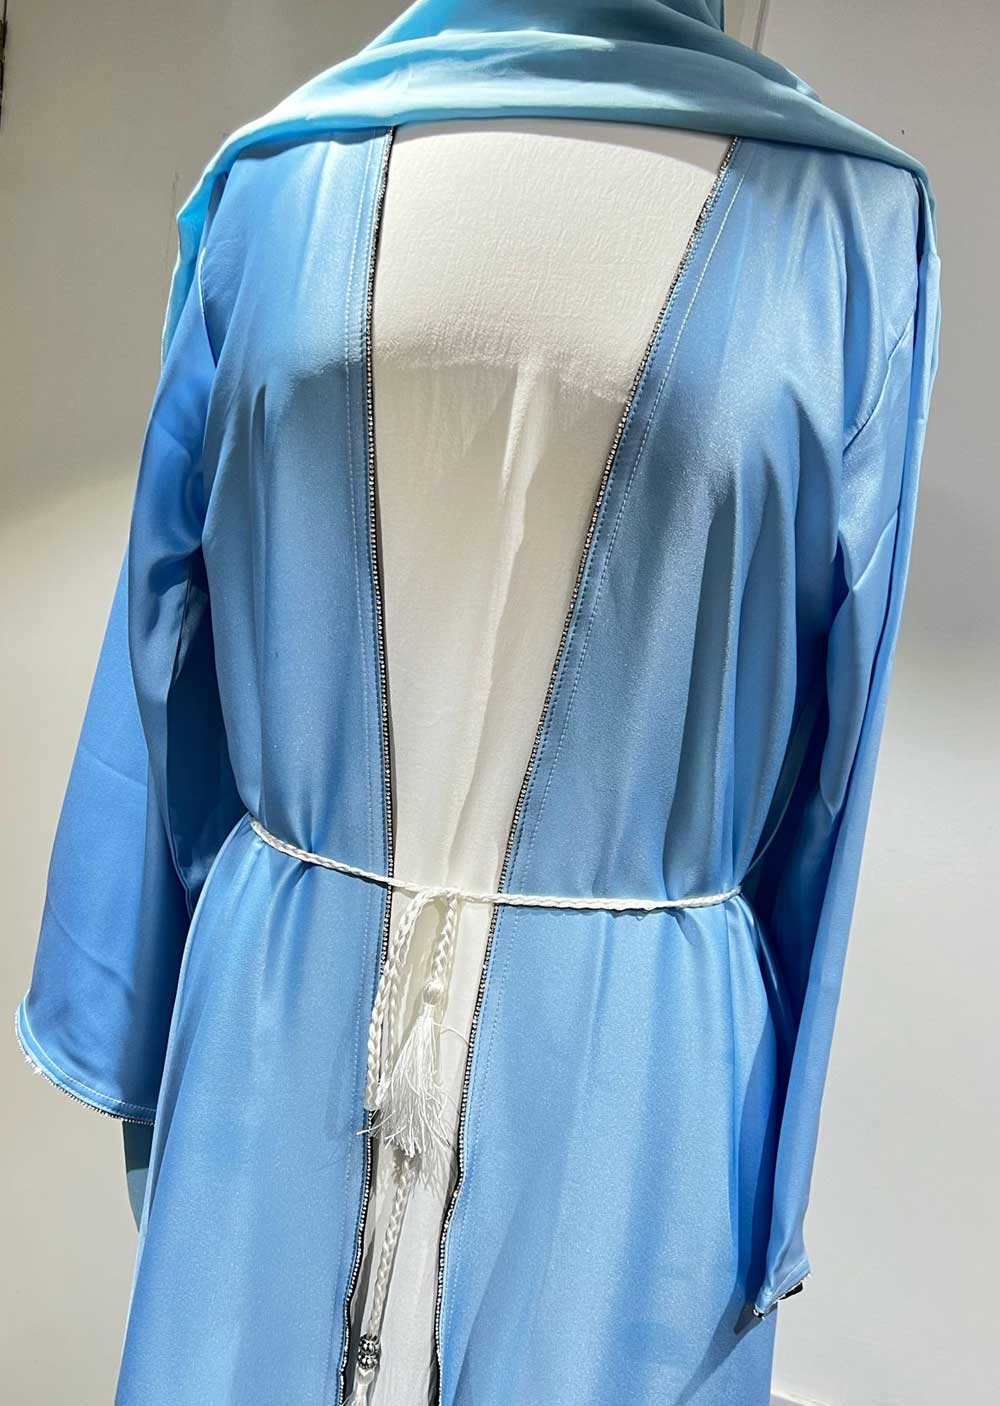 DSL-06 Zobiya - Blue Jacket Style Abaya Set - Memsaab Online